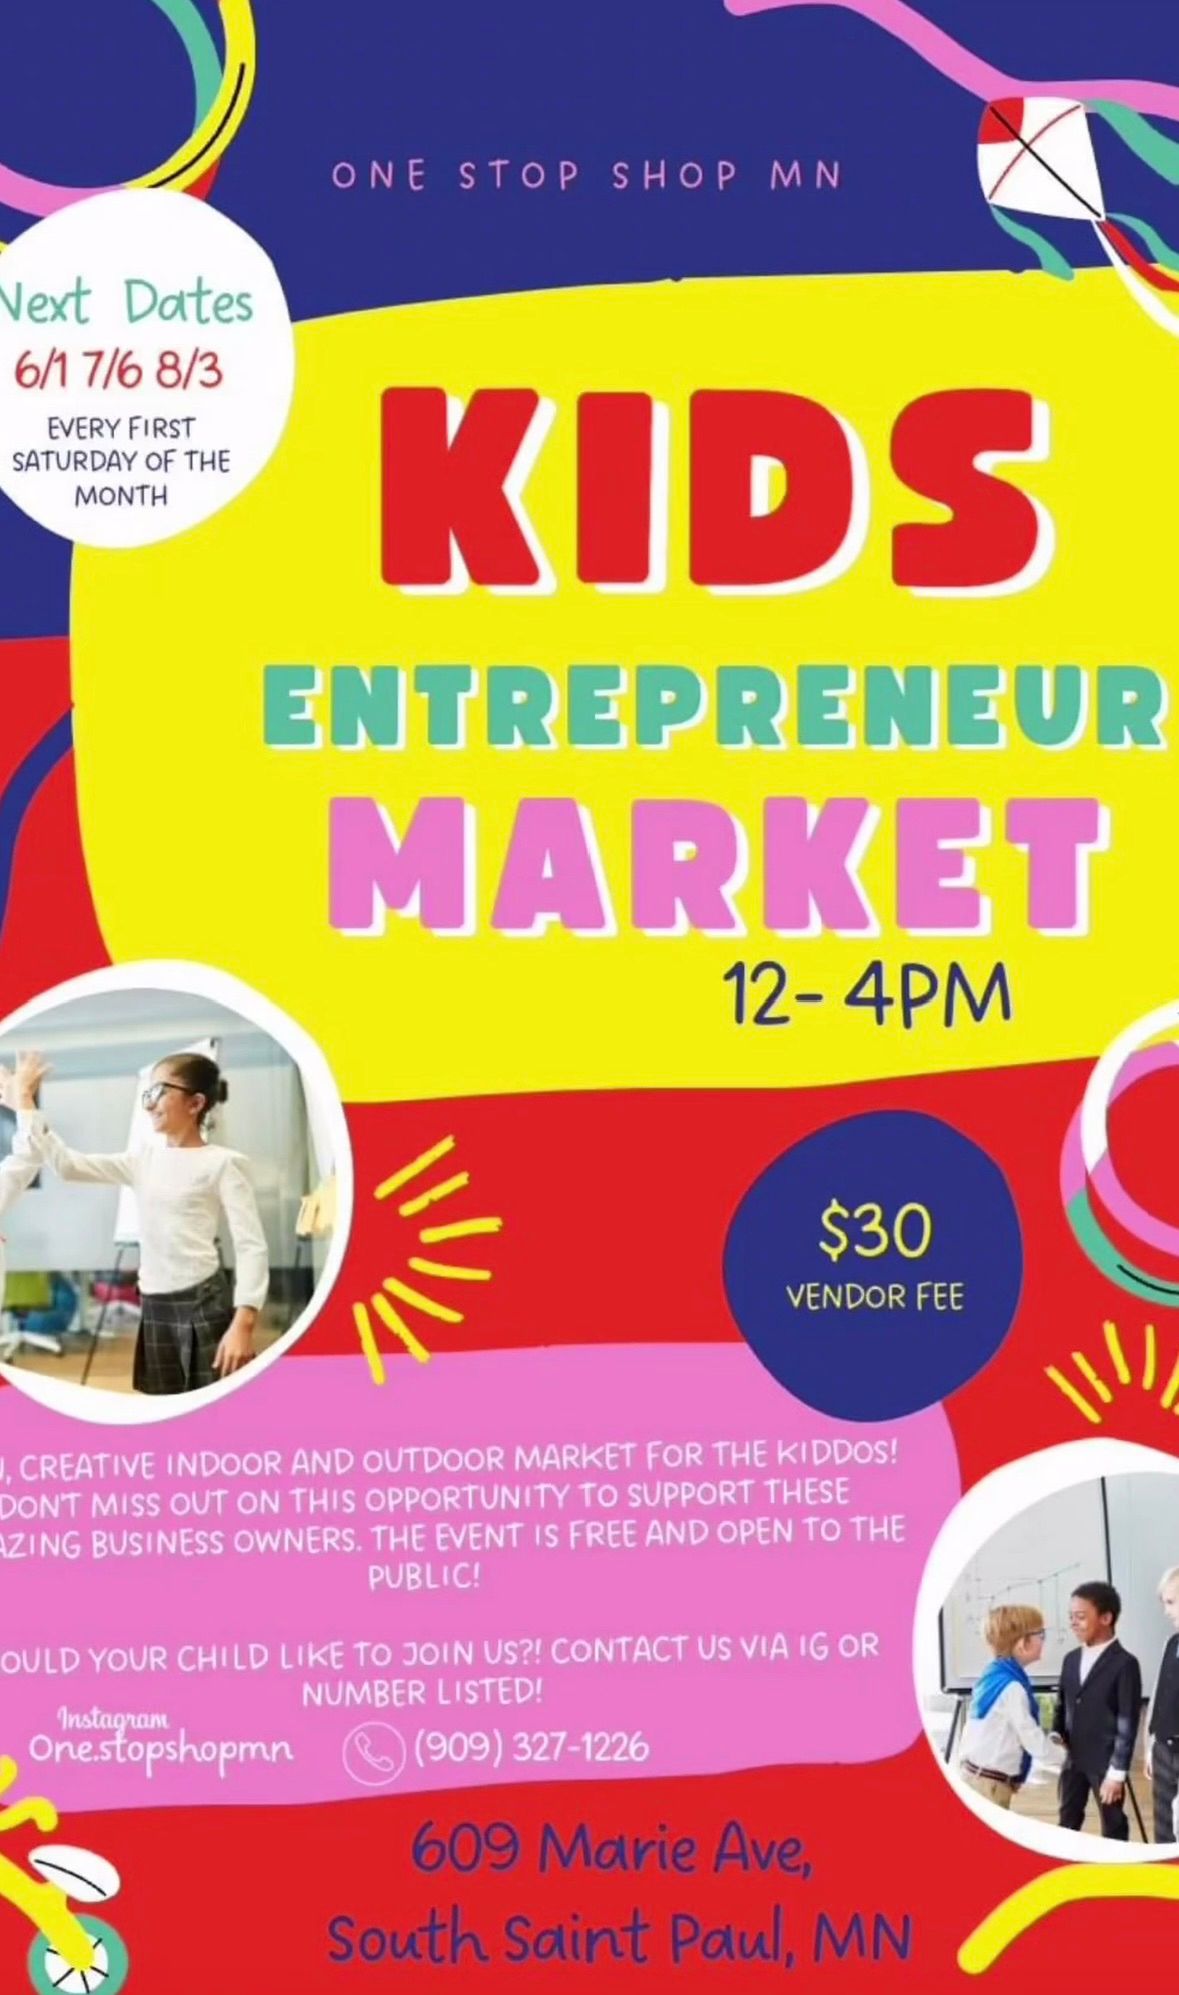 Kid entrepreneur markets 